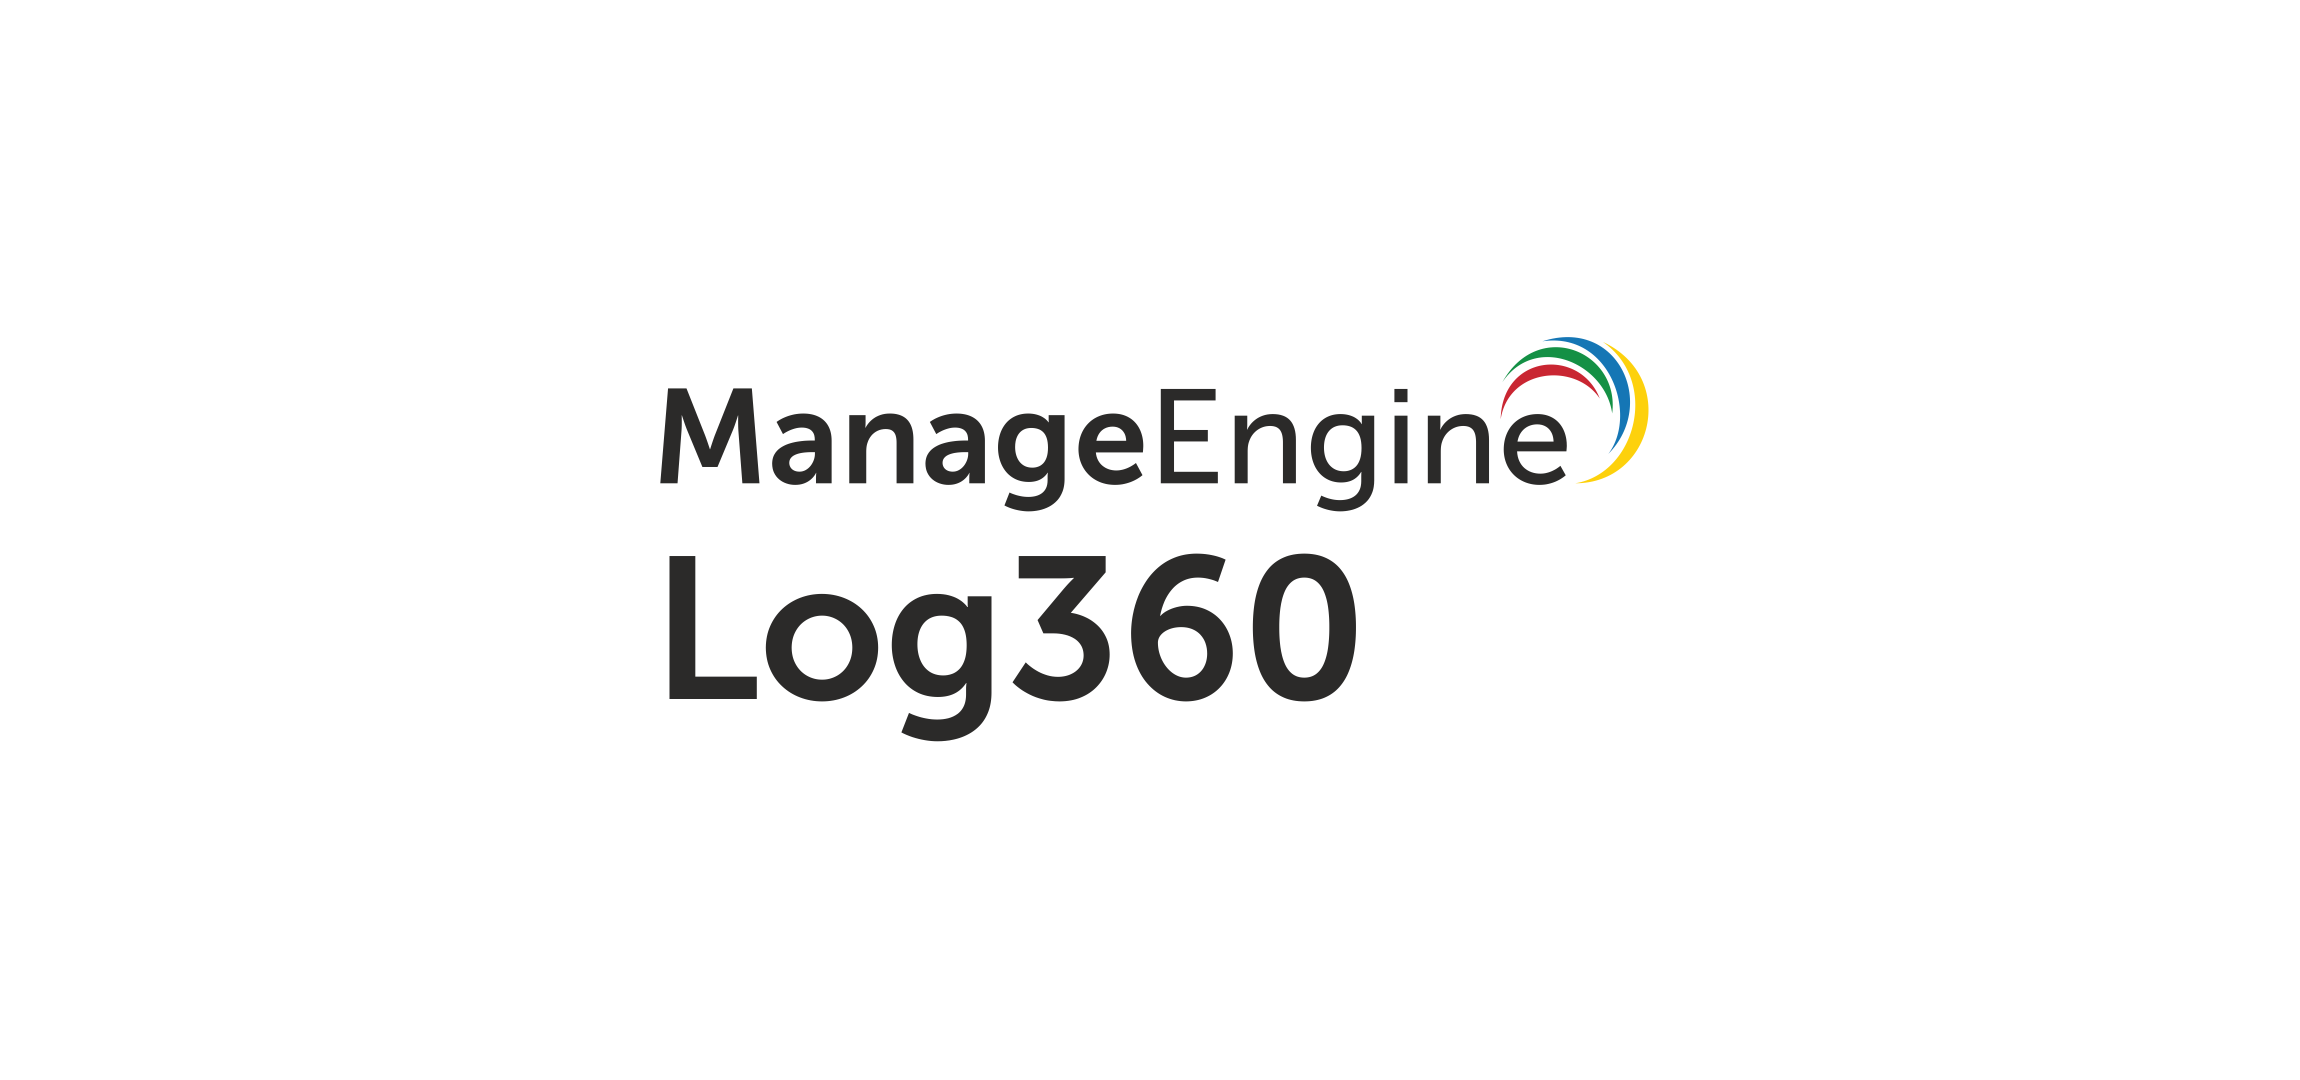 Log360 